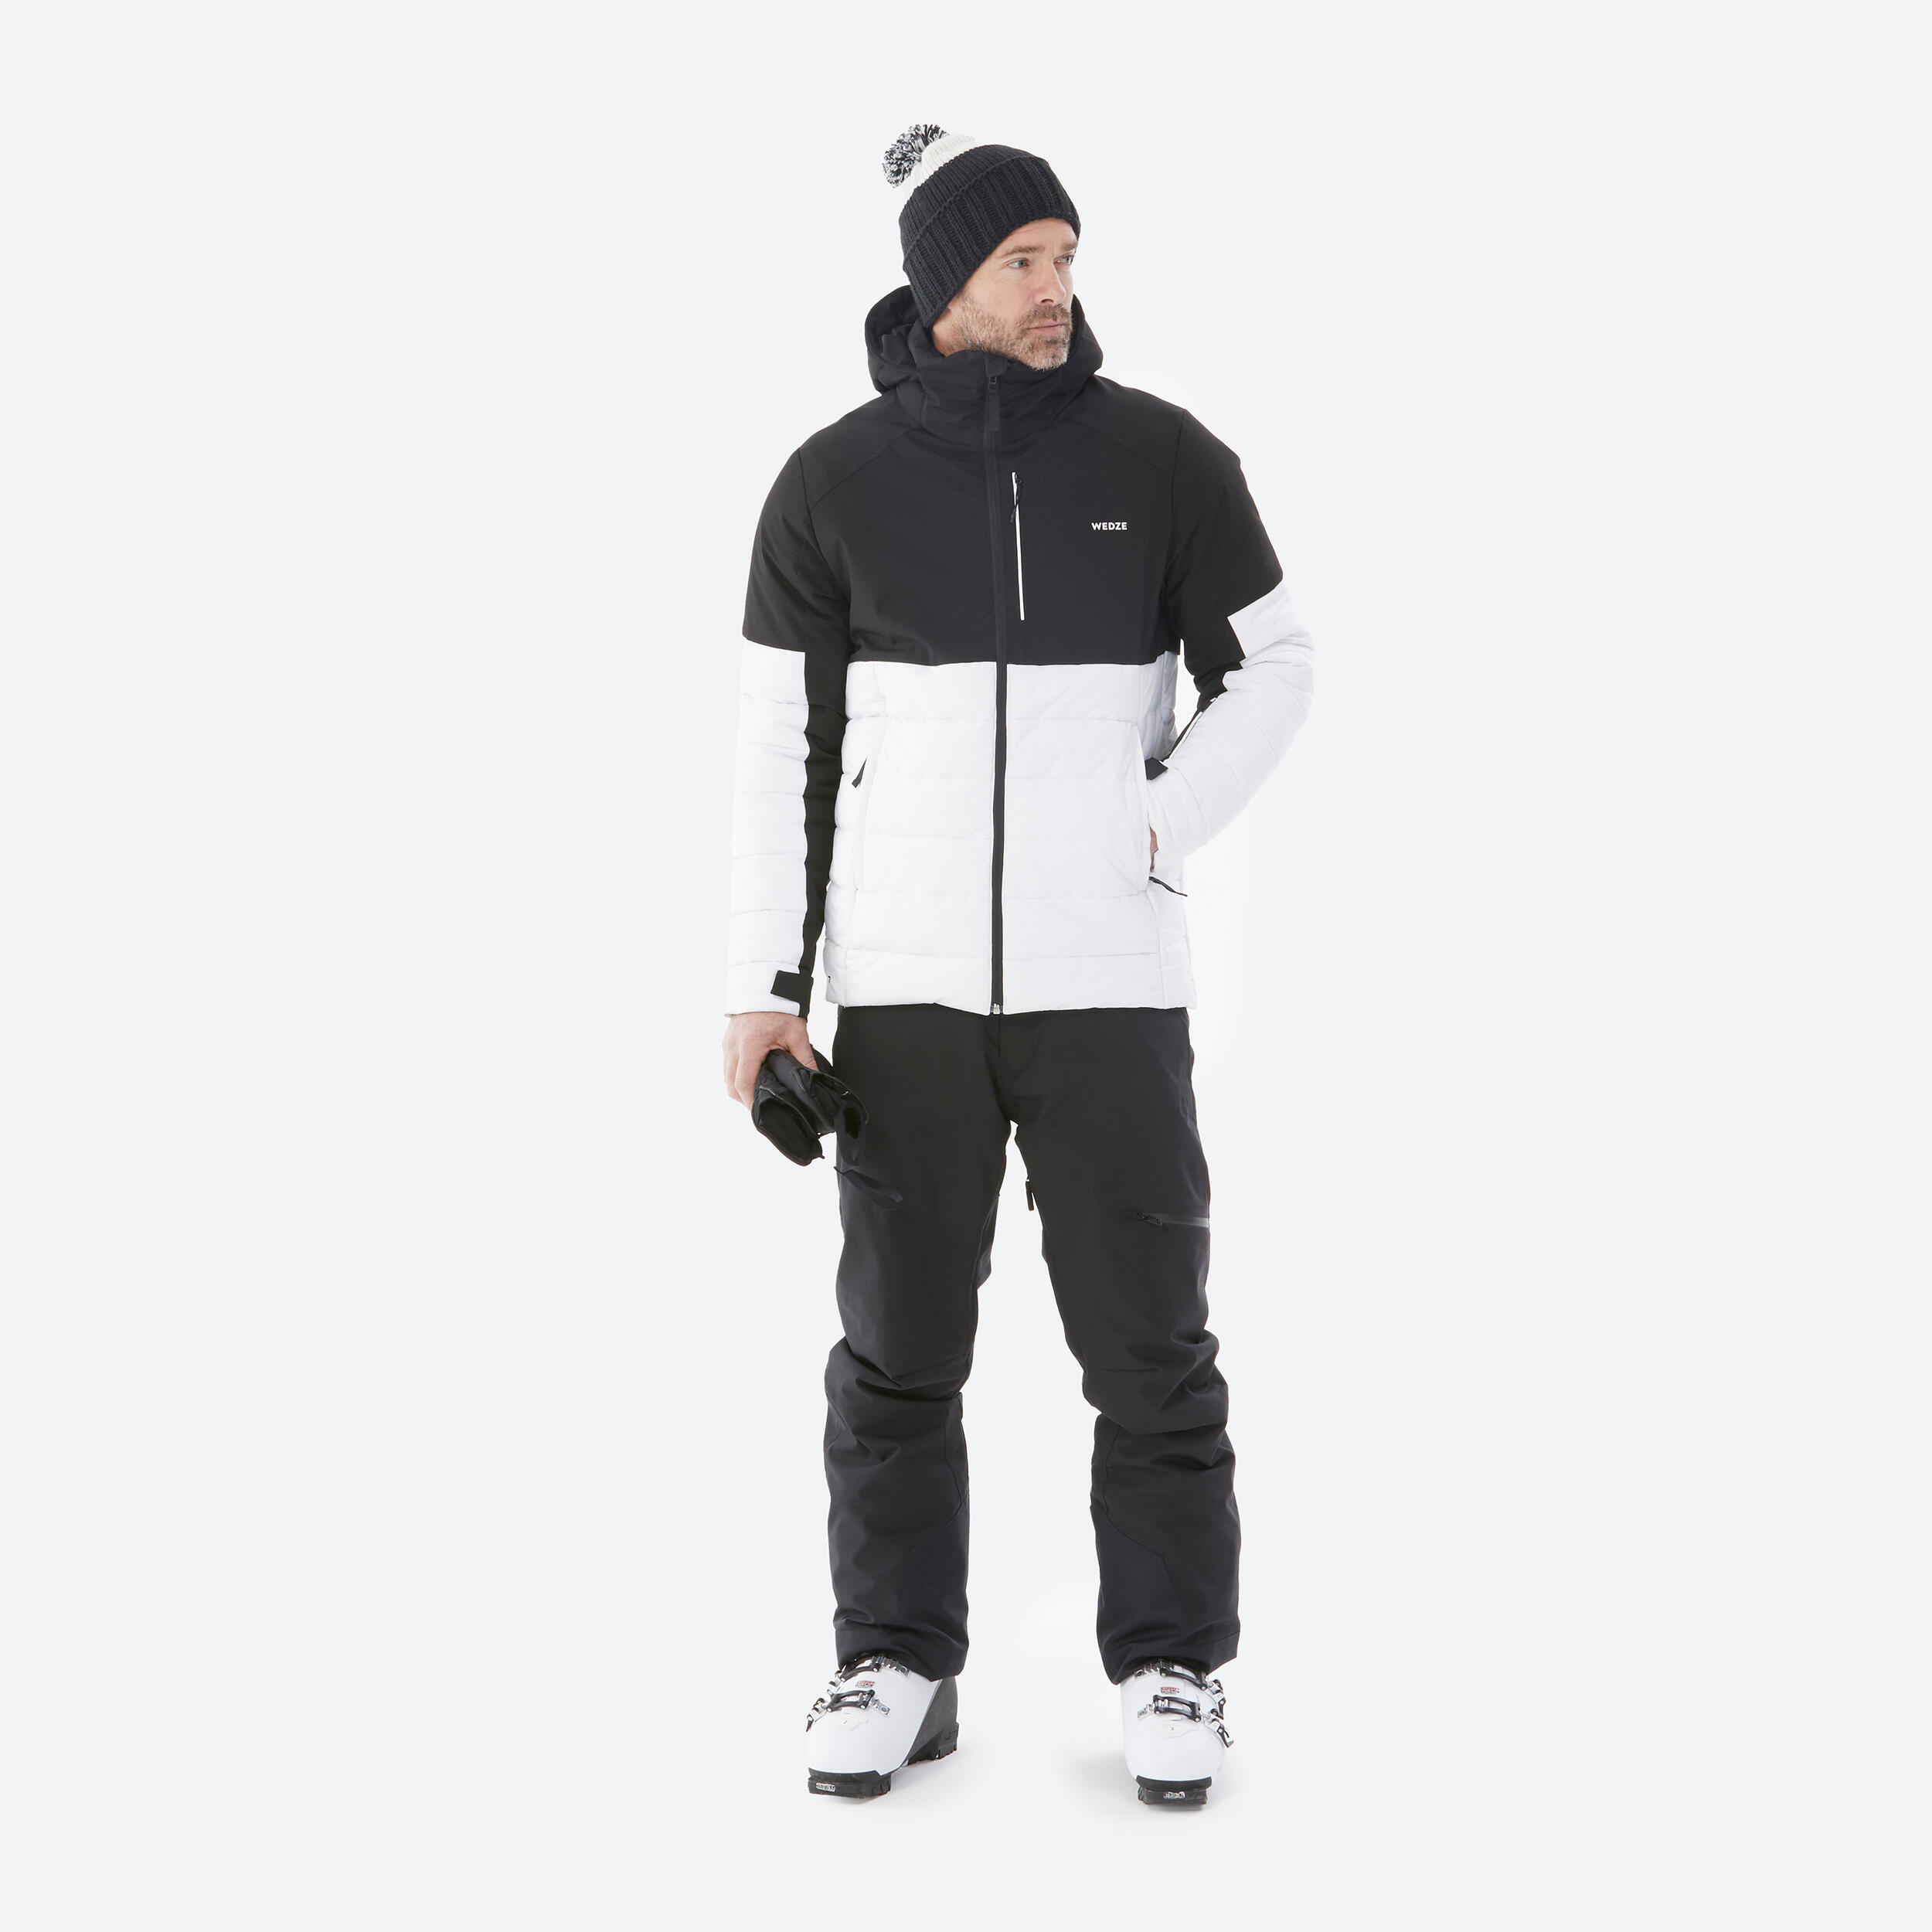 Men’s warm ski and snowboard jacket 100 - white/black 7/12